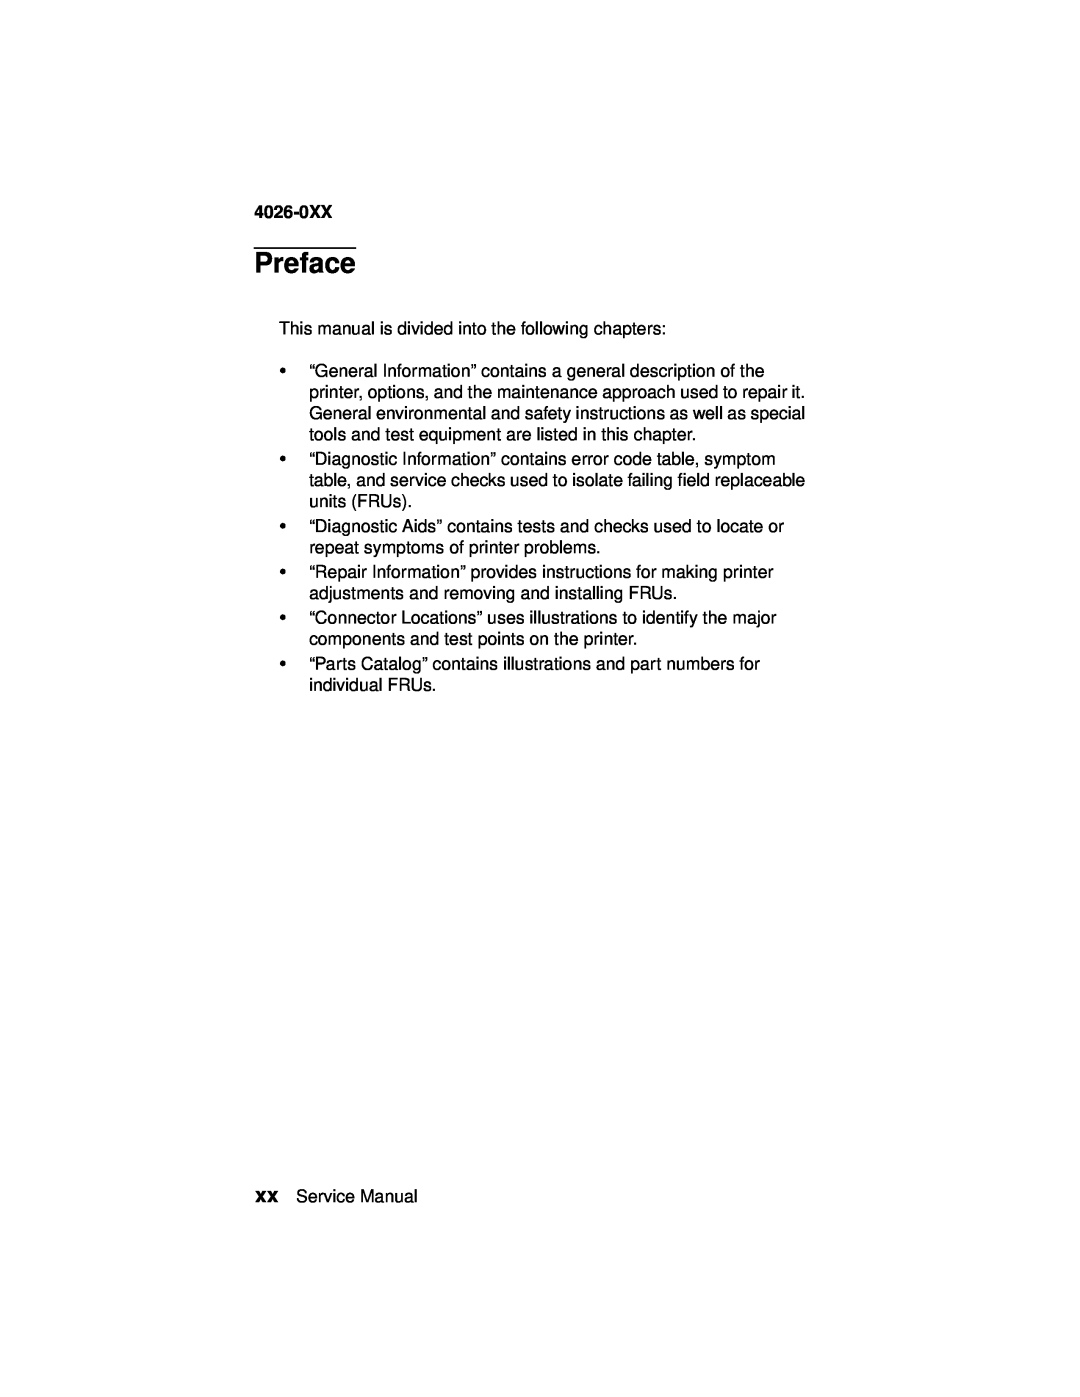 Lexmark OptraTM manual Preface, 4026-0XX 